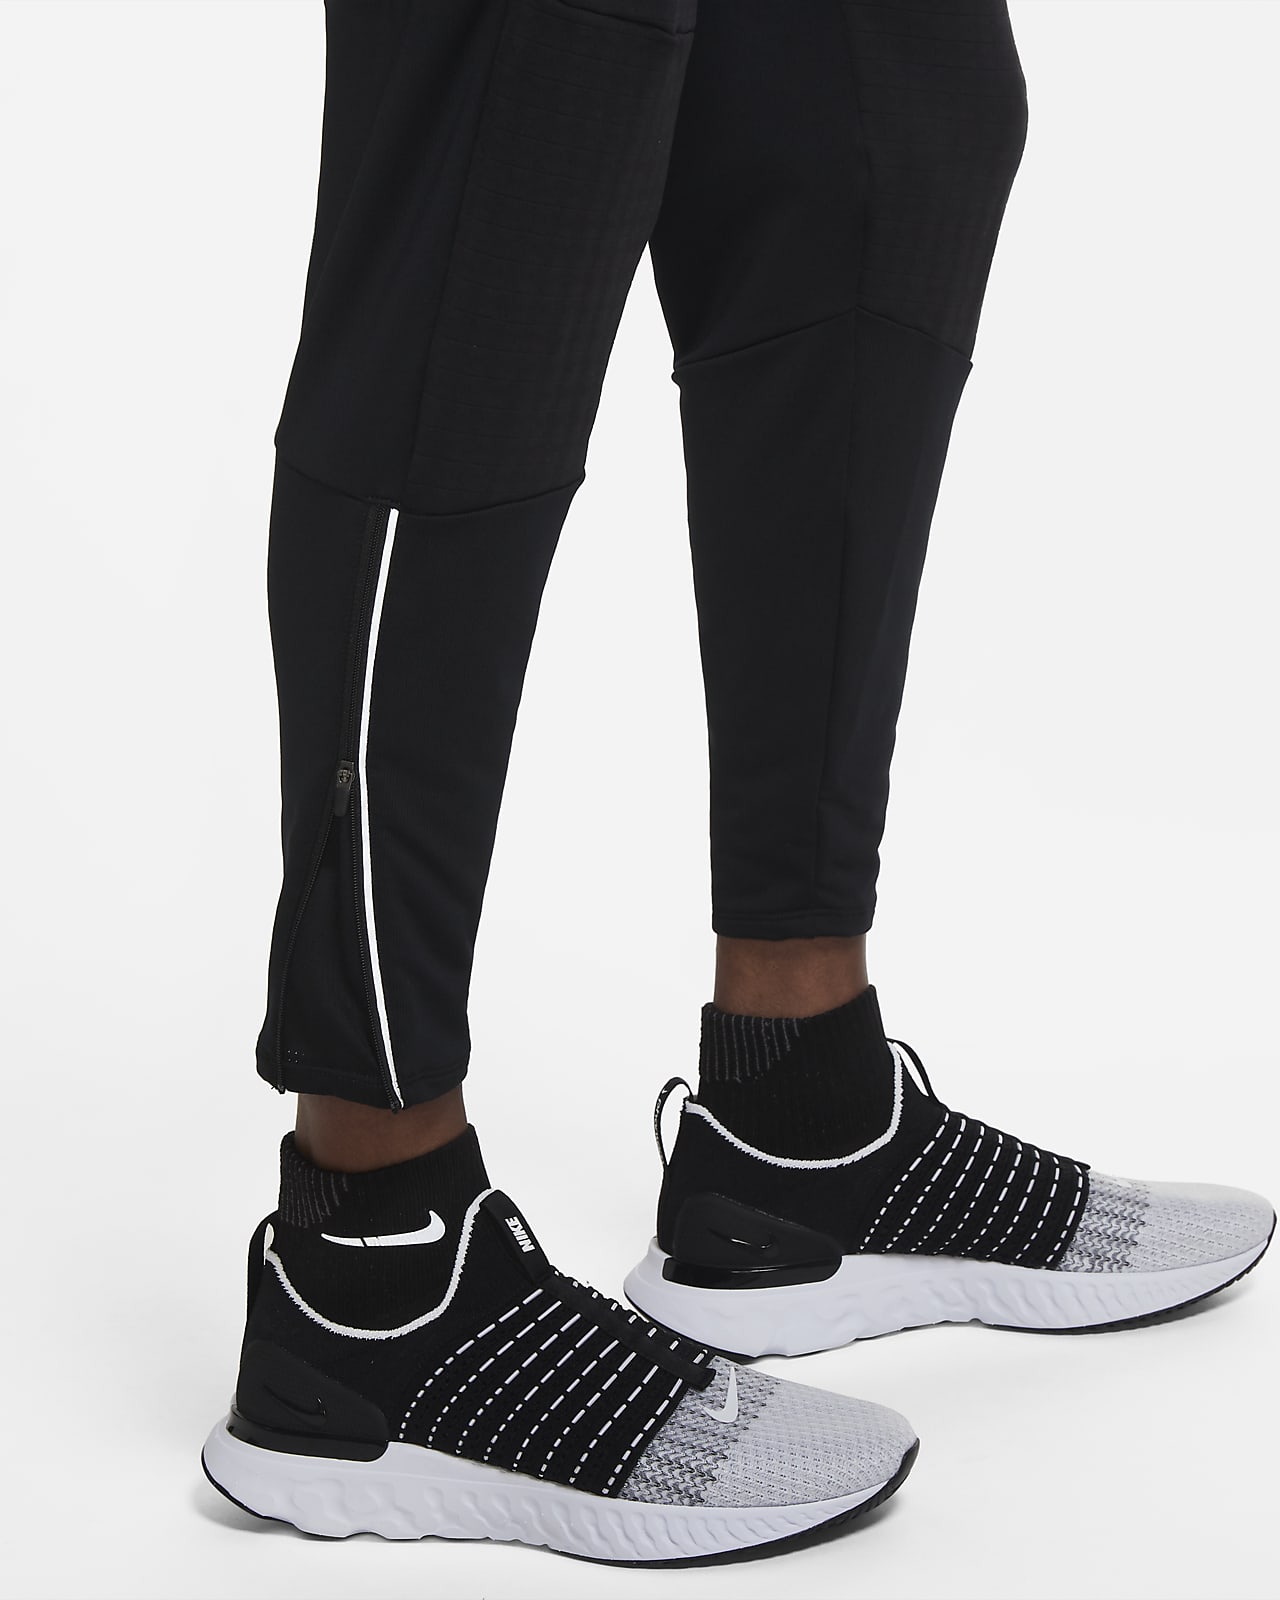 Nike Running pants STORM-FIT PHENOM in black